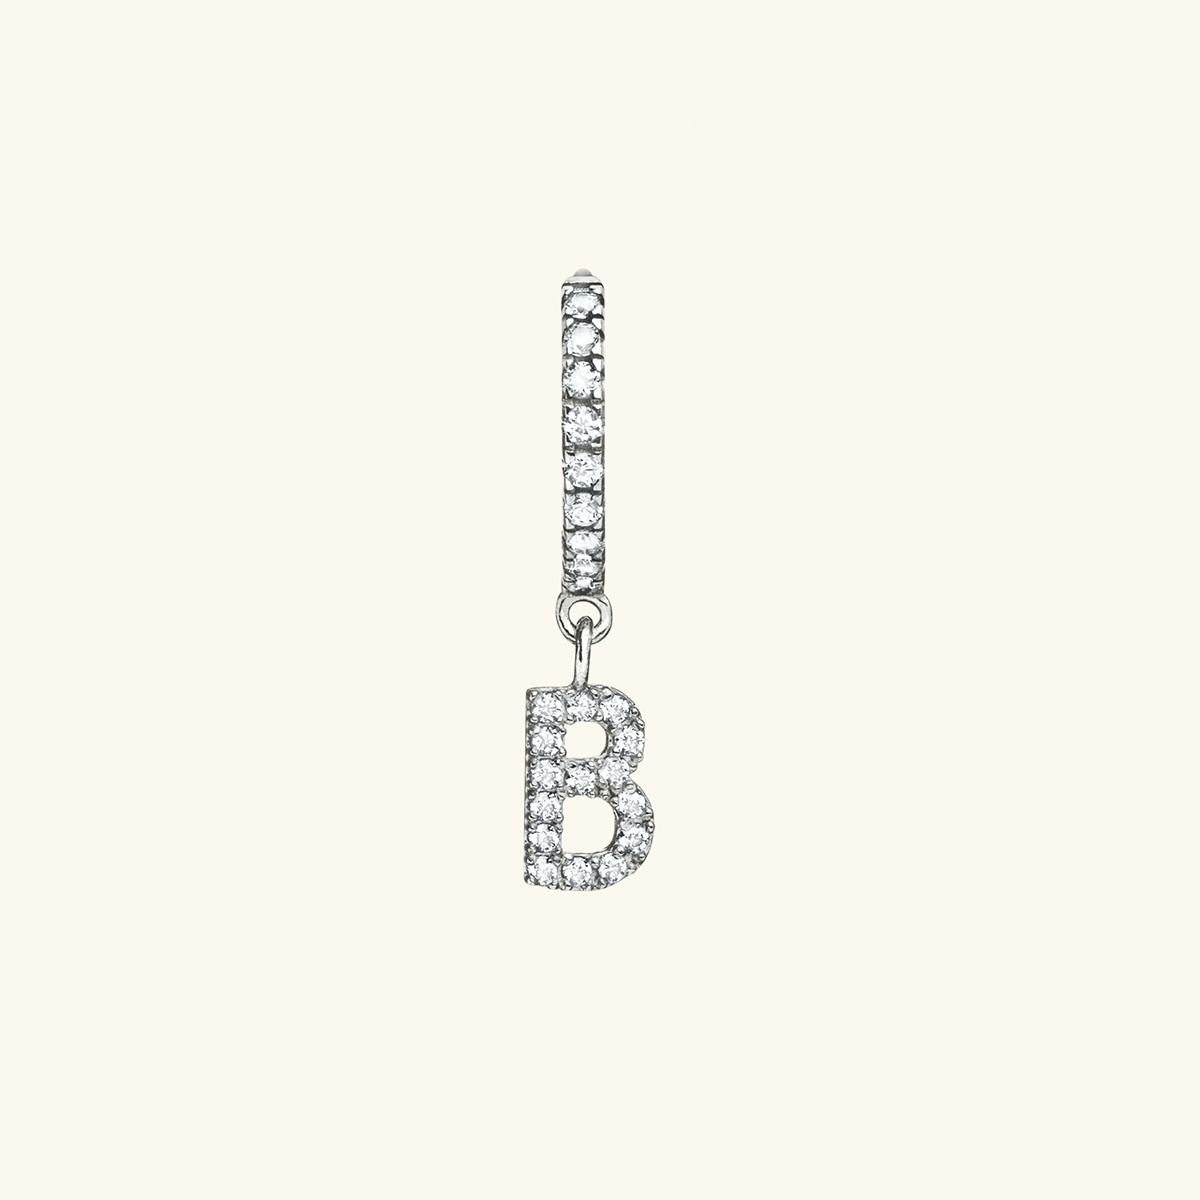 Thin Chain Necklace Silver - 45 cm